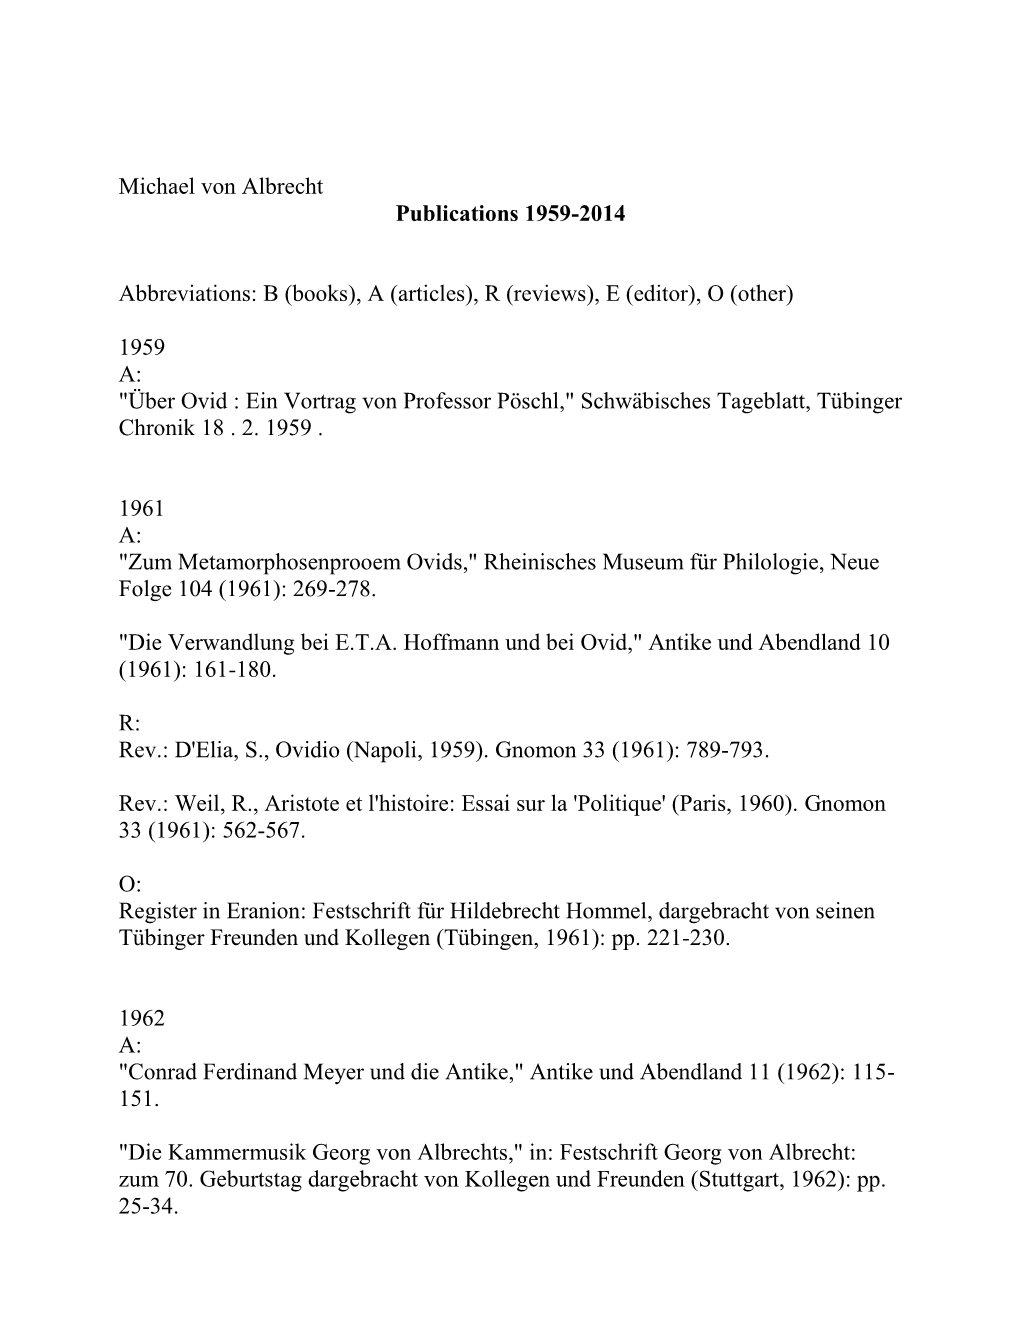 Michael Von Albrecht Publications 1959-2014 Abbreviations: B (Books)